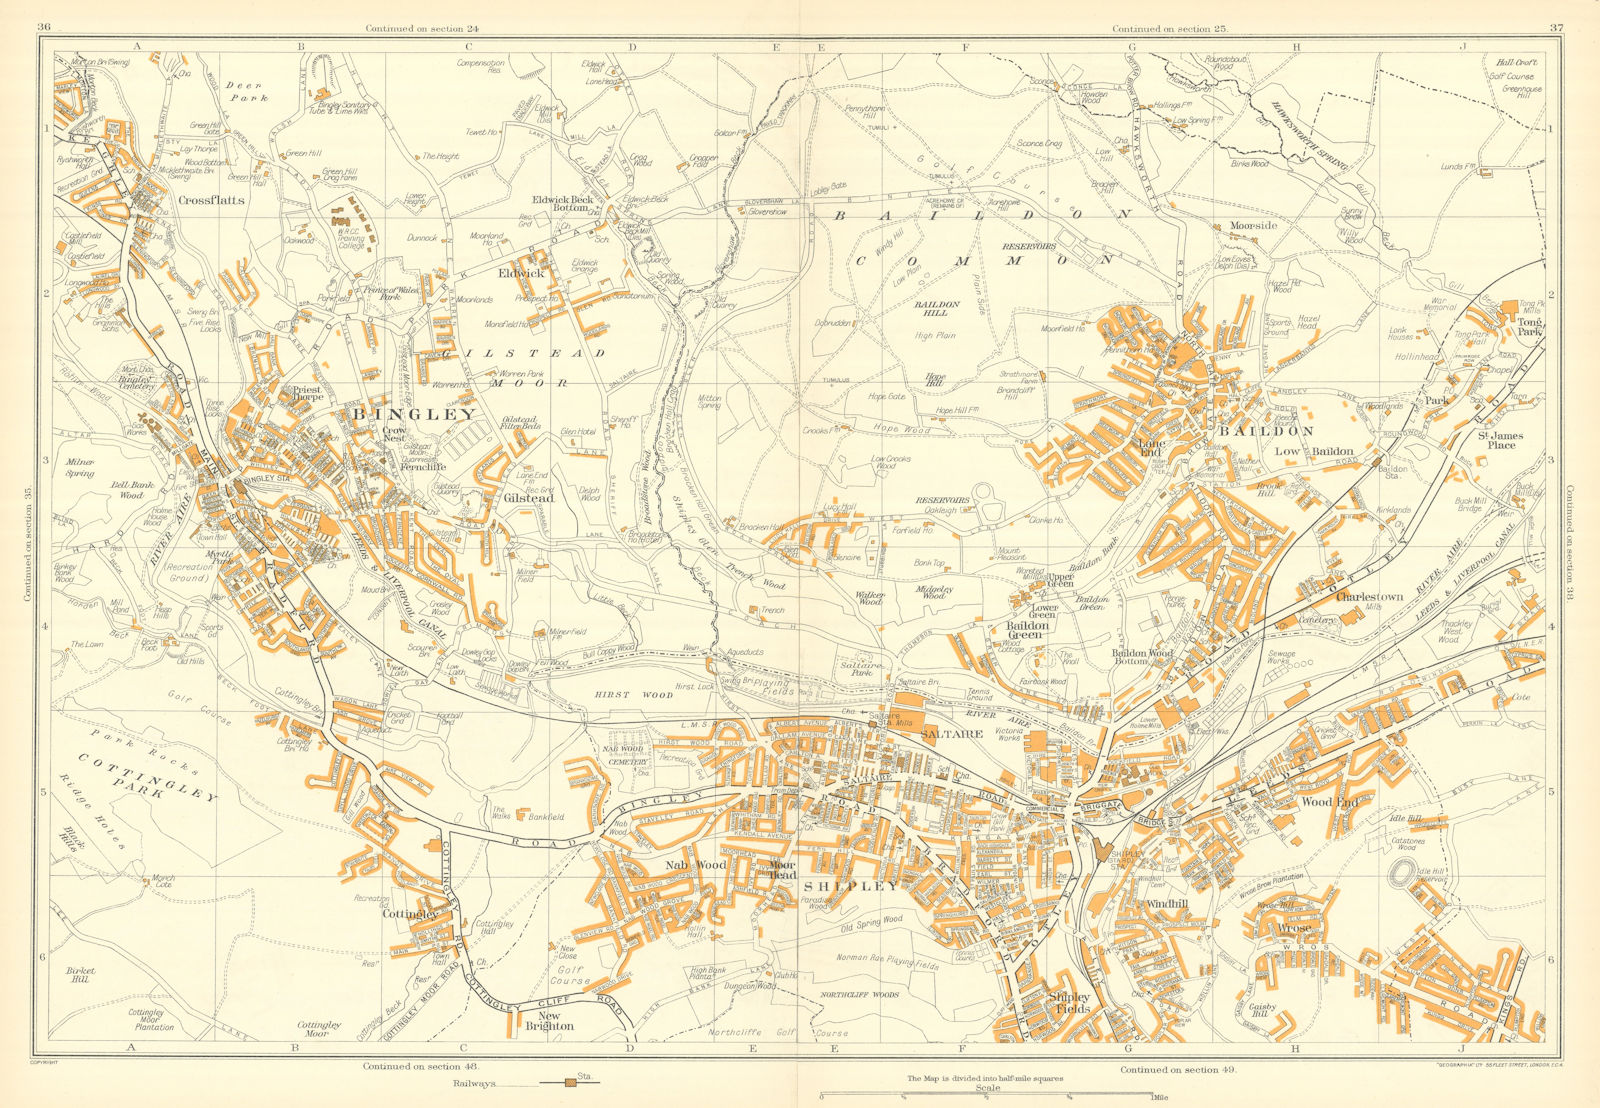 BINGLEY, SHIPLEY & BAILDON vintage town city plan. GEOGRAPHIA 1935 old map